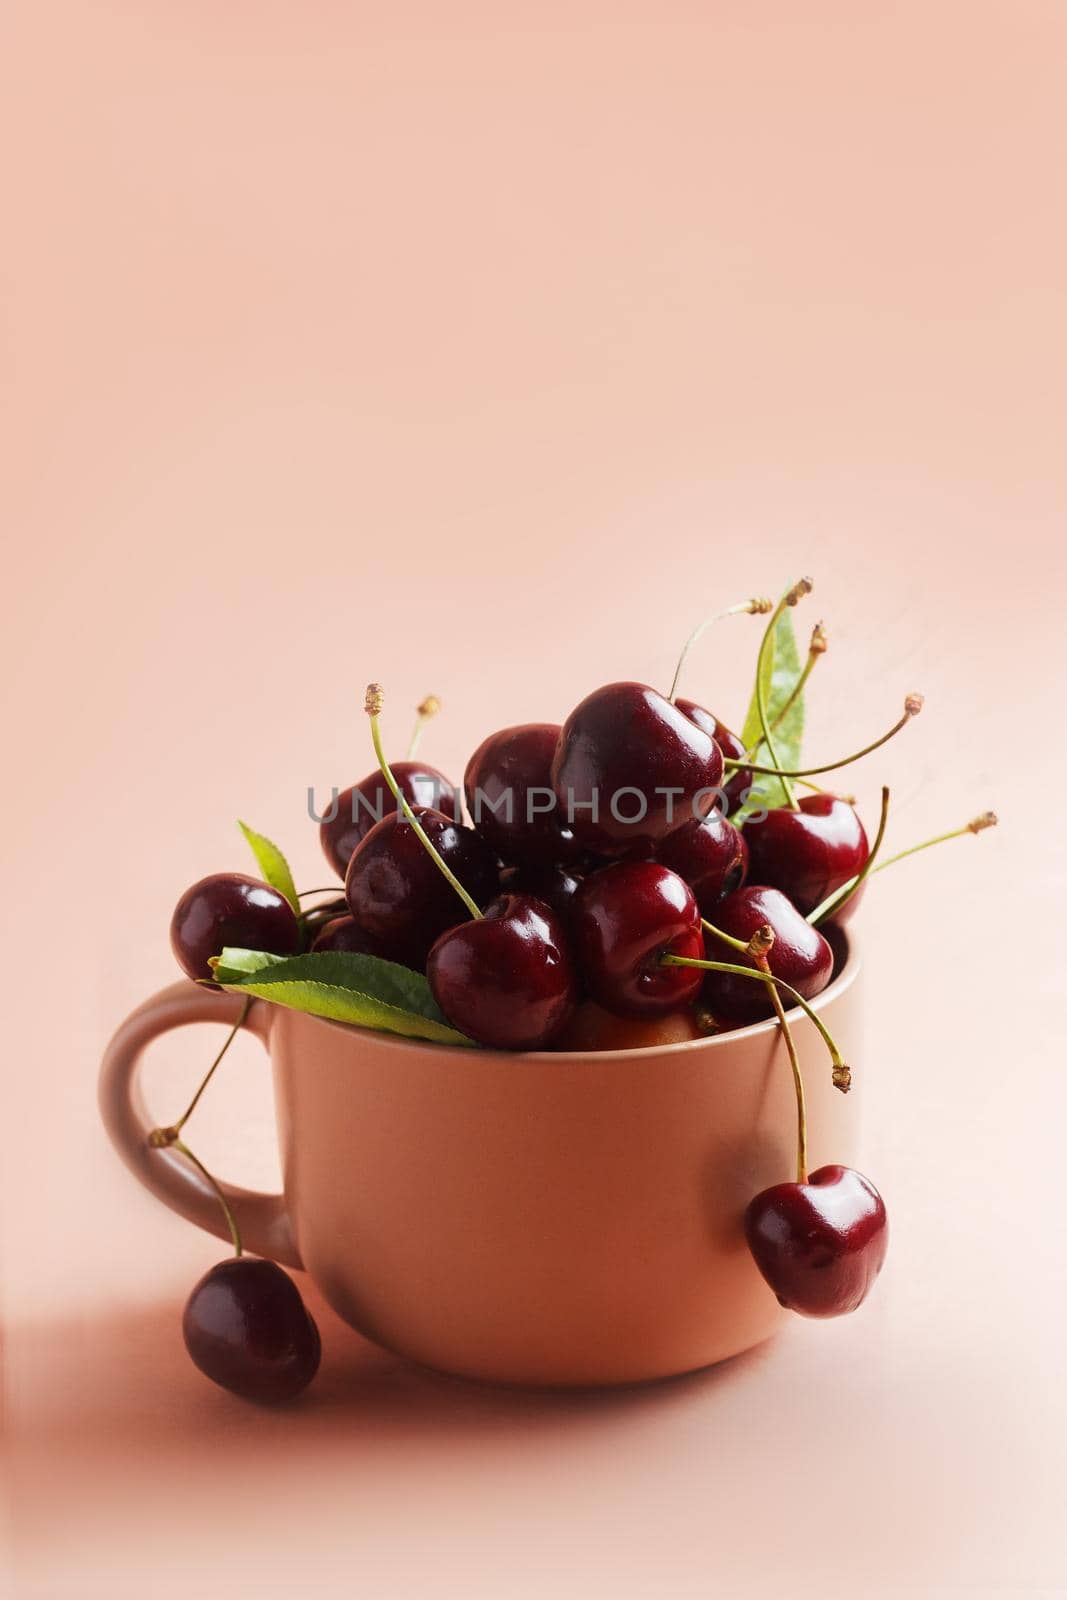 Fresh, ripe cherries in a ceramic mug on a beige background. copy space